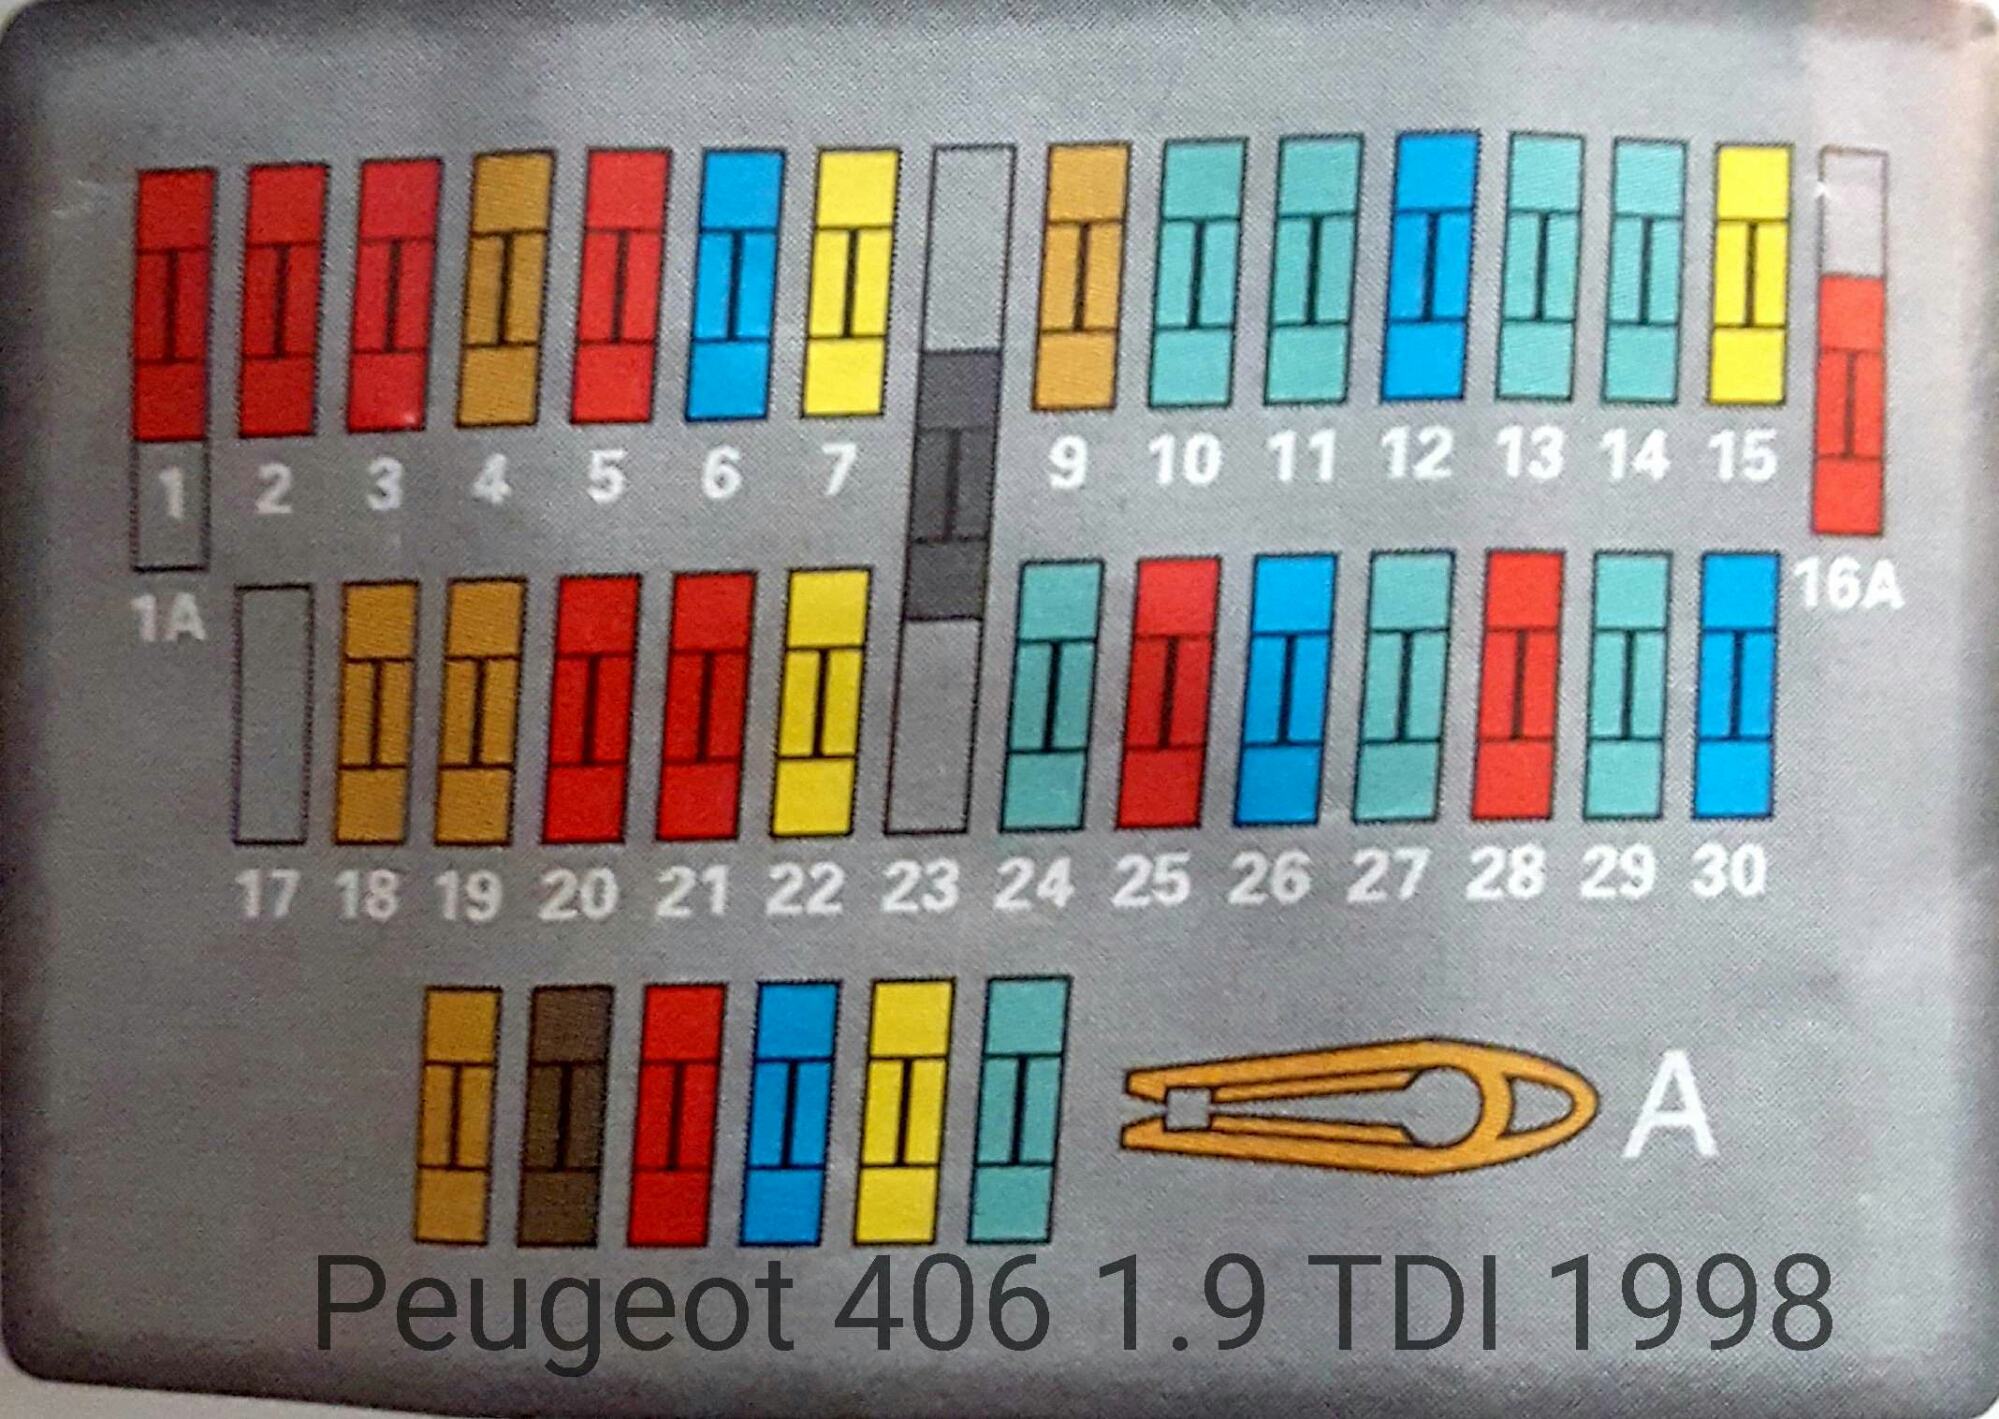 Peugeot 406 1.9 TDI 1998 Fuse Box. – CarTips | Peugeot 406 ... fuse box layout peugeot 407 